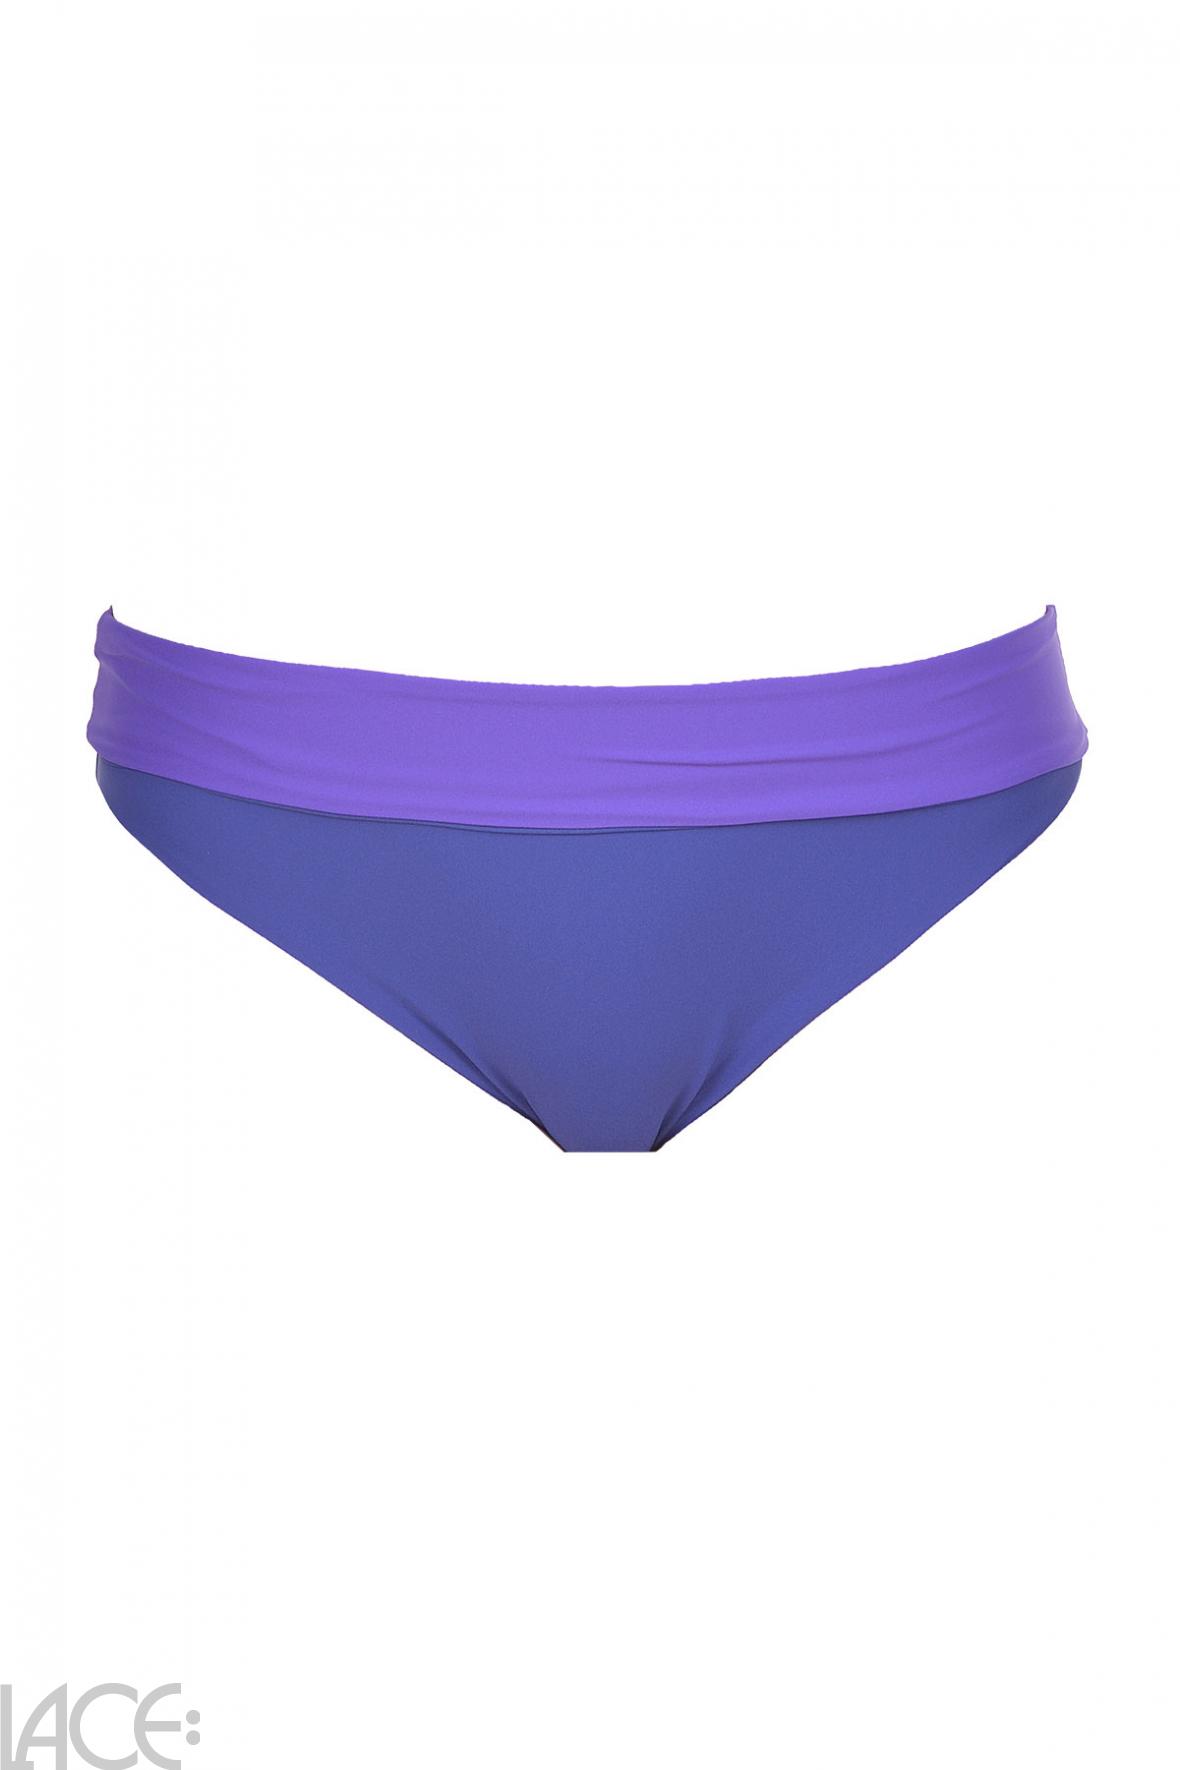 LACE Swim Katholm Bikini Folded brief BLUE – Lace-Lingerie.com